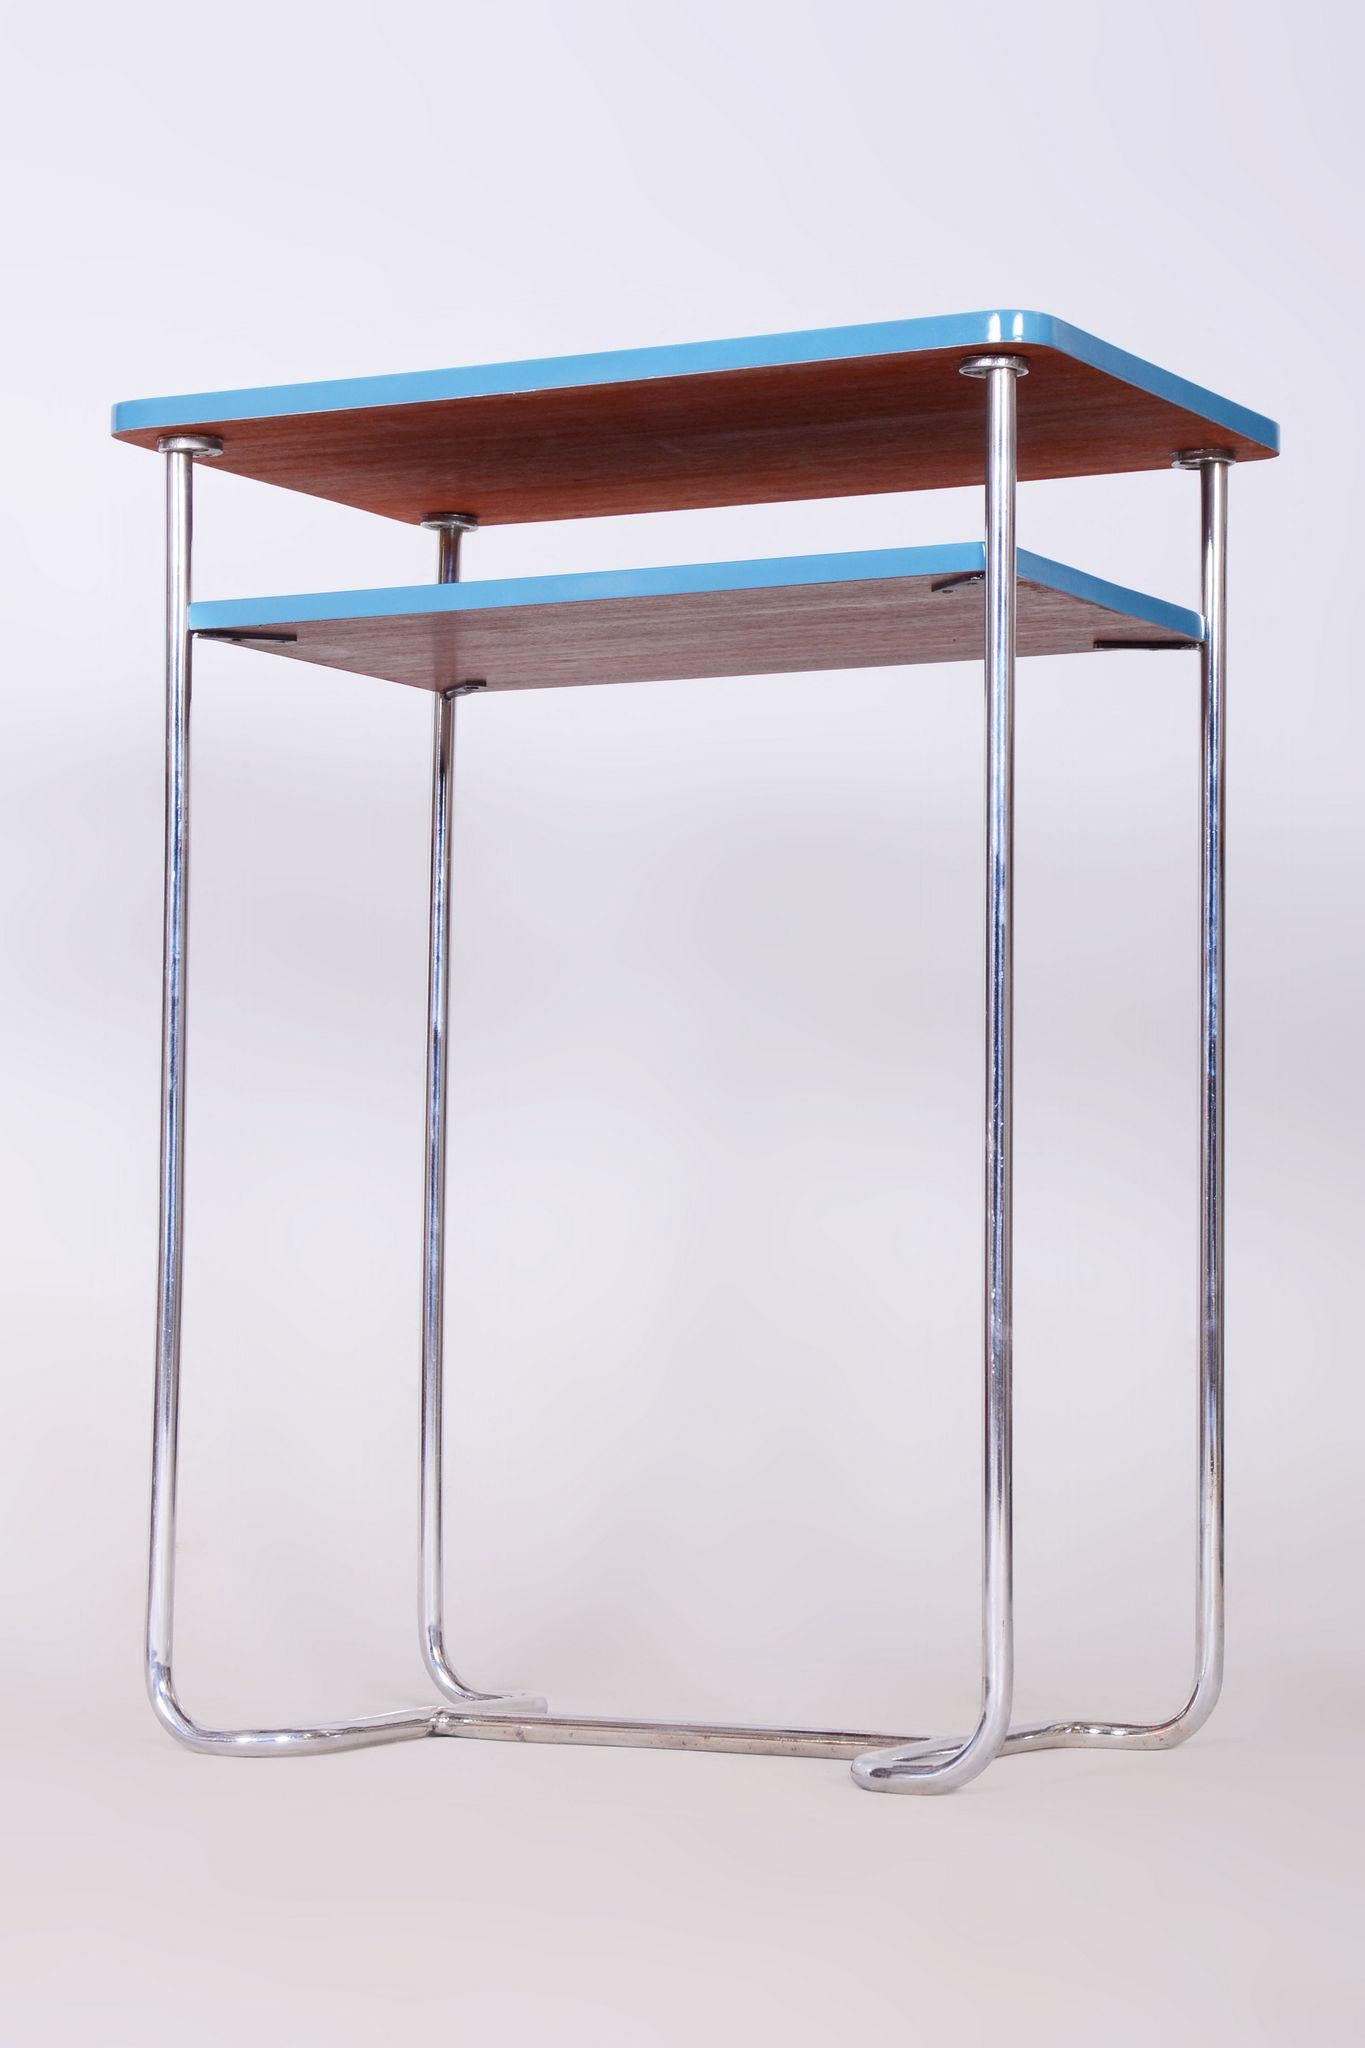 Restored Blue Side Table, by Mücke-Melder, Chrome-Plated Steel, Czech, 1930s For Sale 3